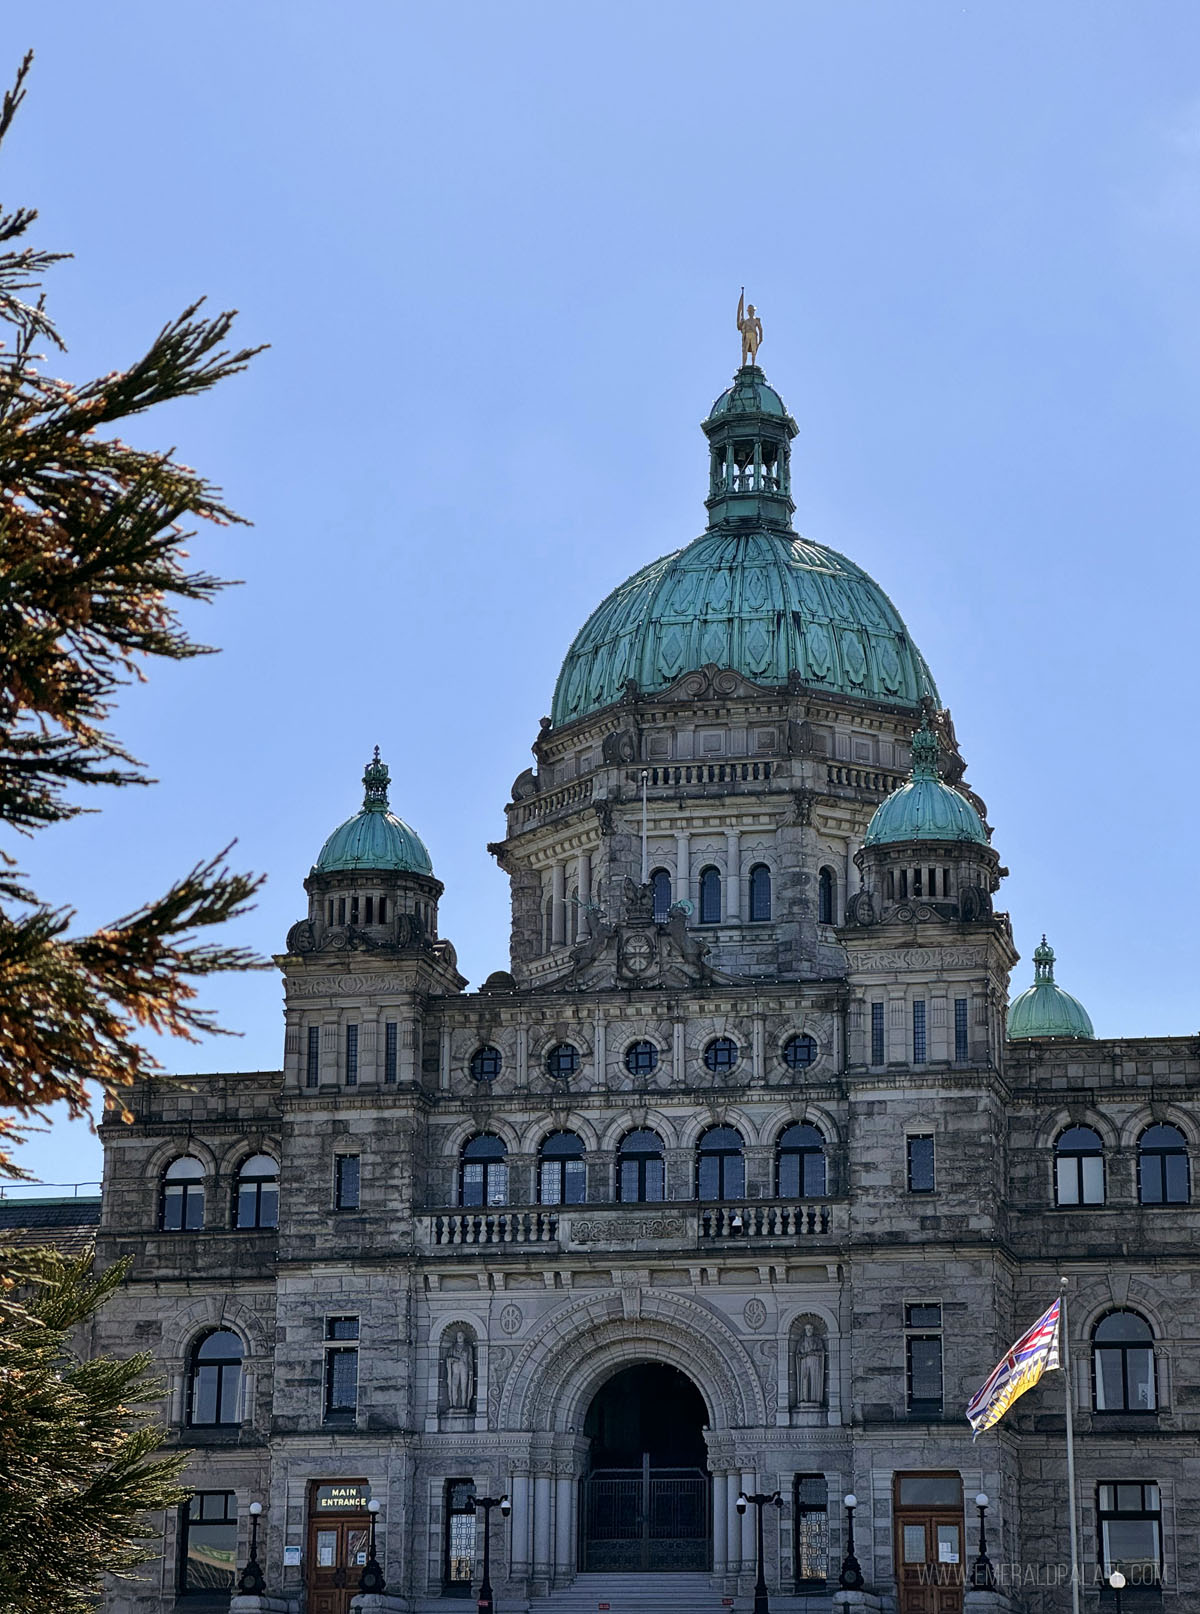 iconic legislative building in Victoria BC